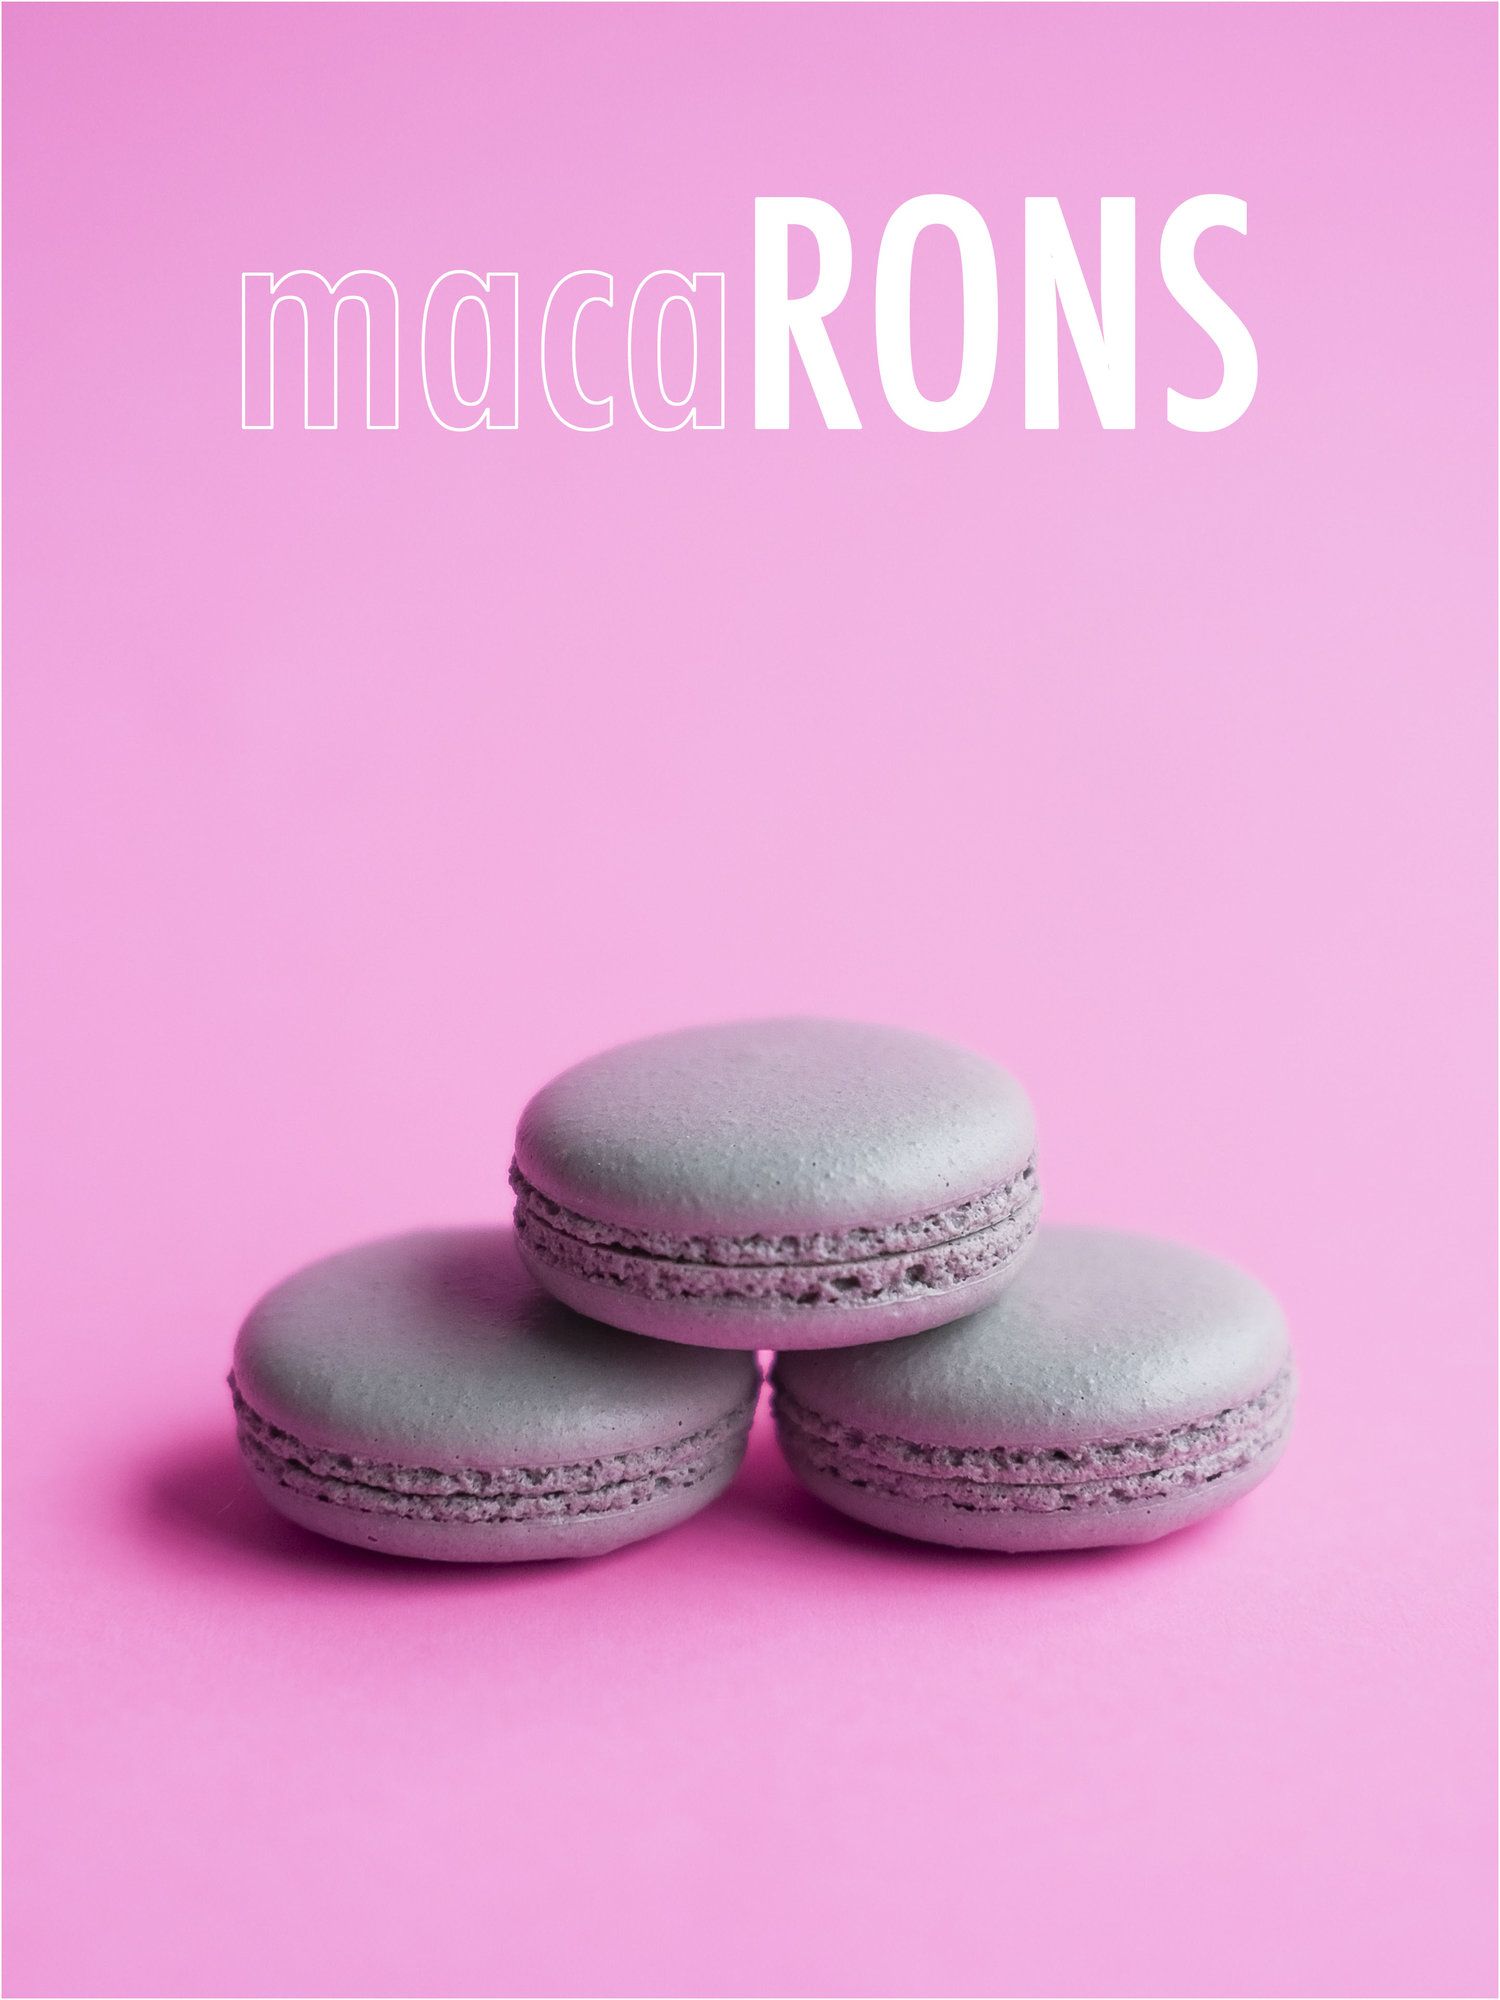 Three purple macarons on a pink background - Macarons